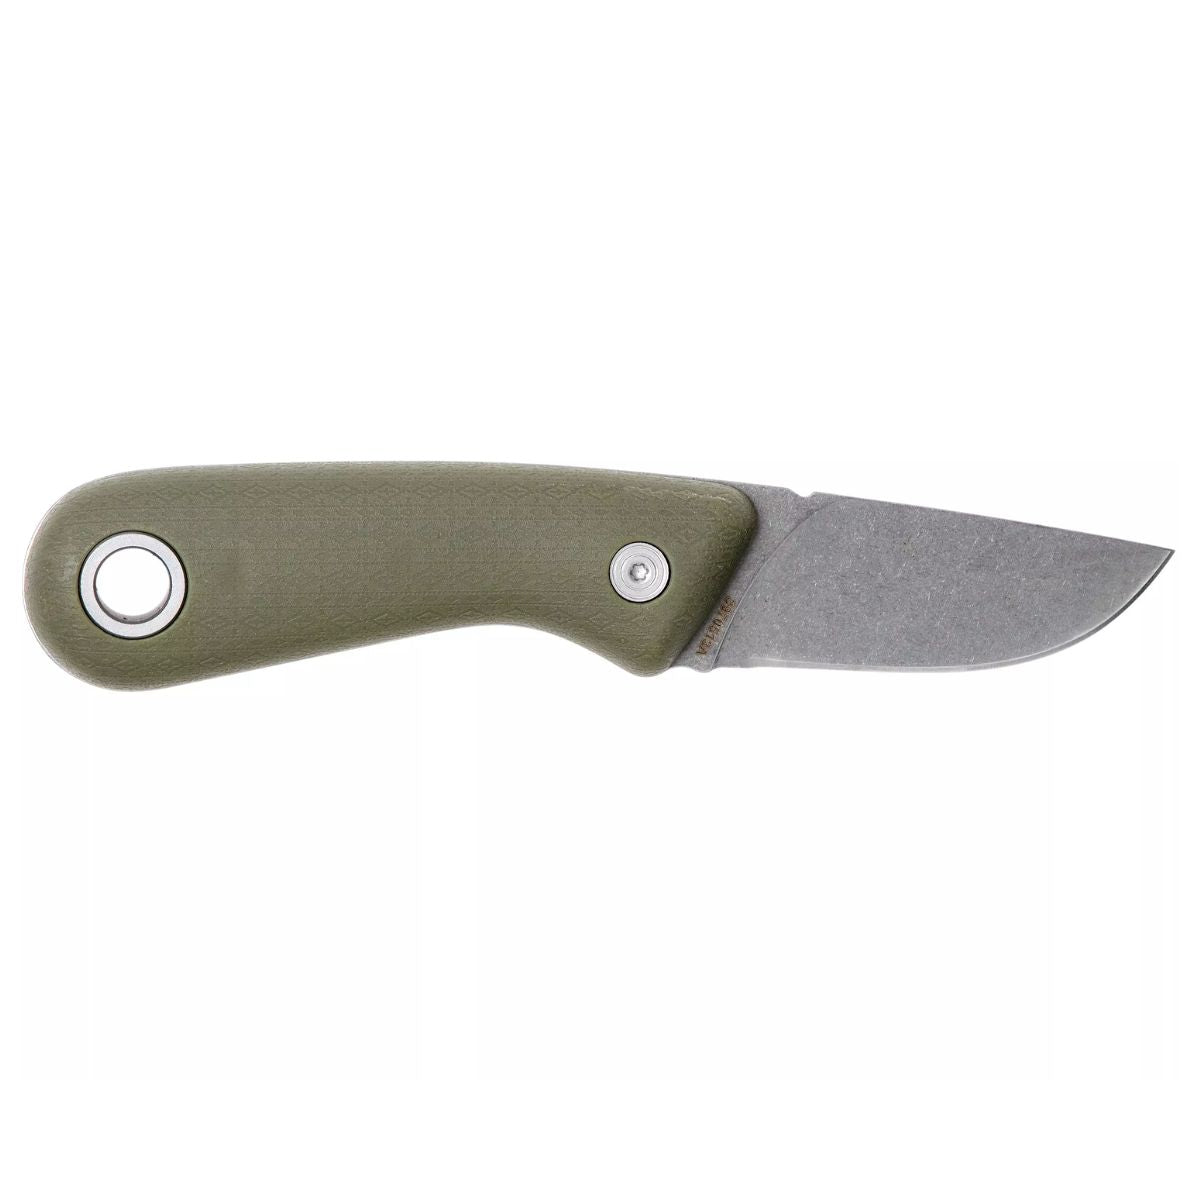 Gerber Vertebrae Fixed Blade Knife - Sage Green - 2